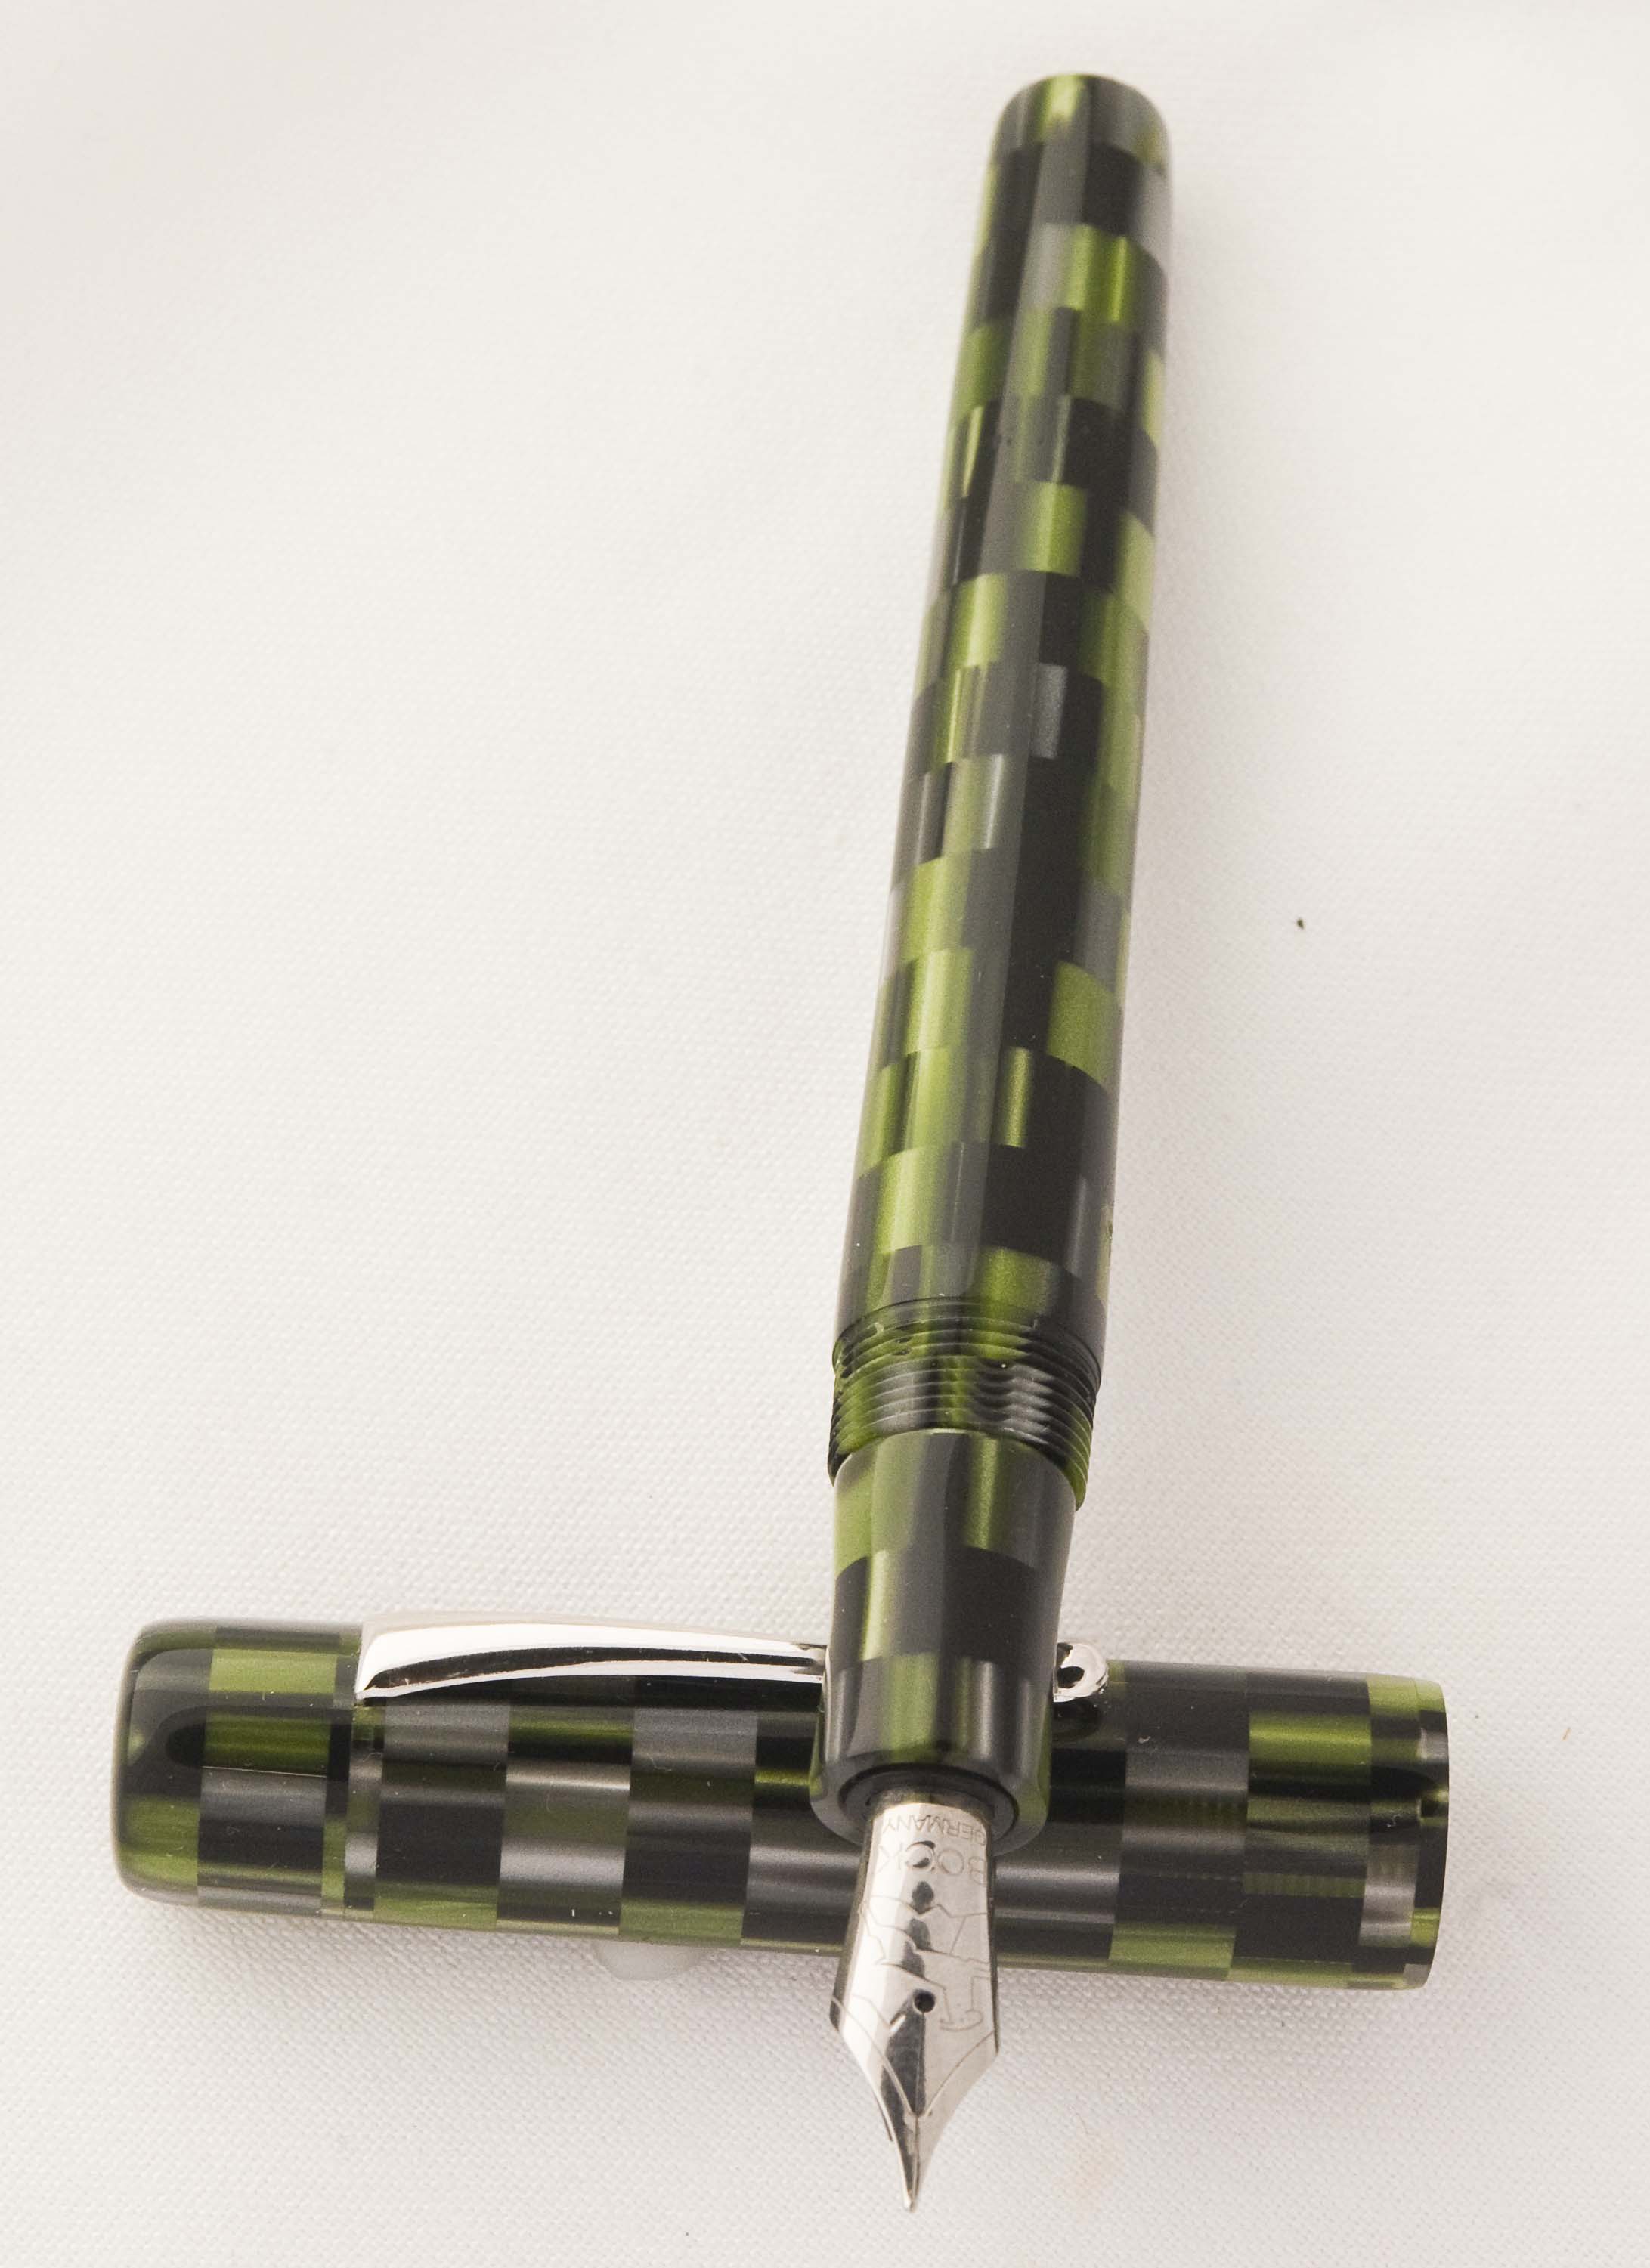 Custom Green Mosaic